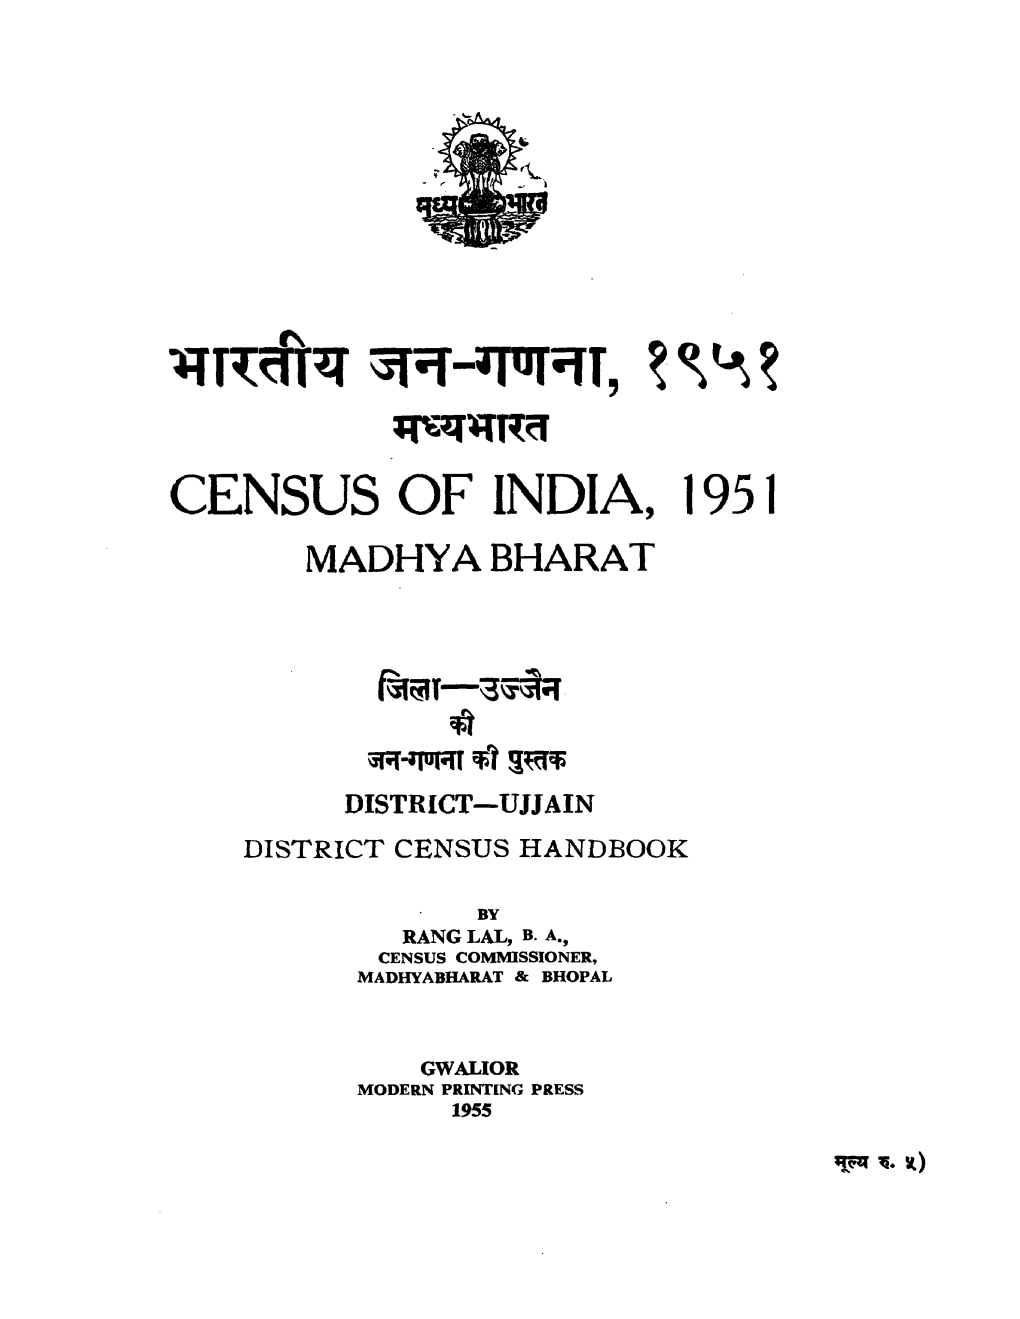 District Census Handbook, Ujjain, Madhya Bharat